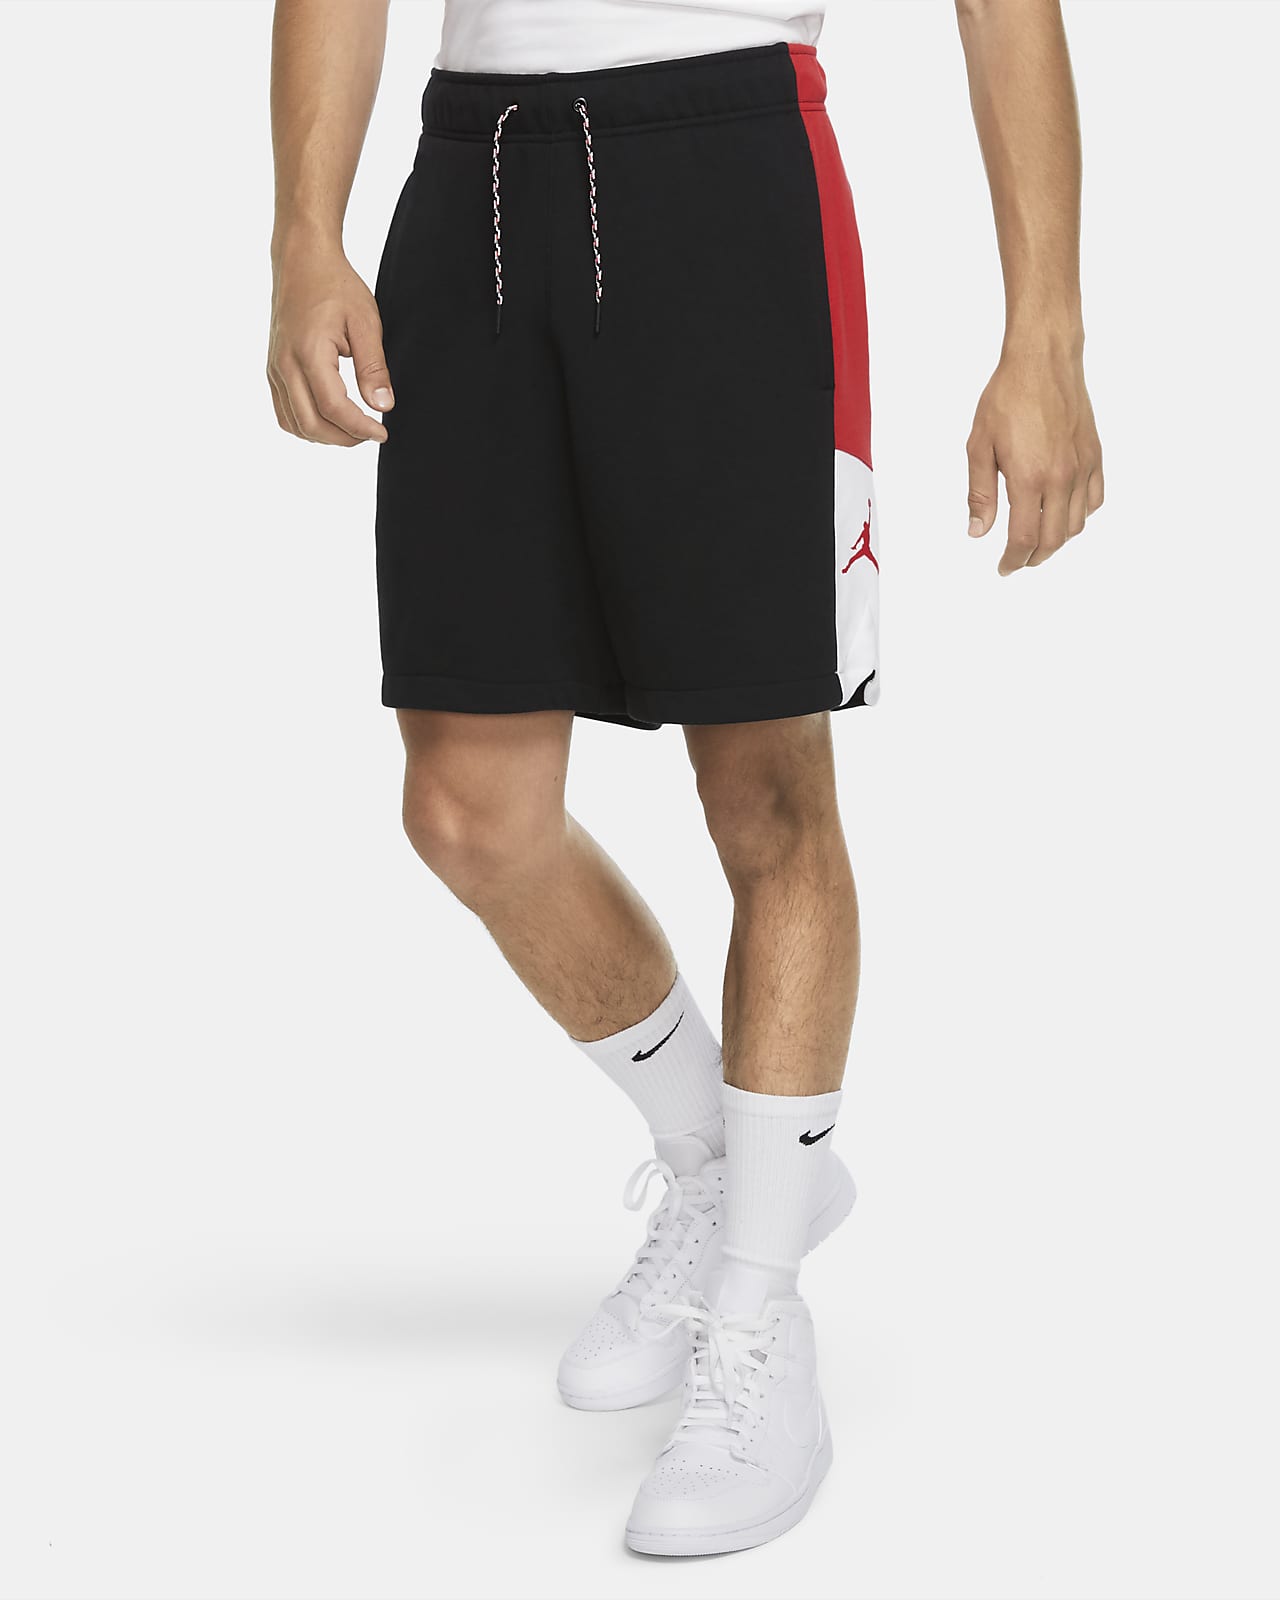 jordan 1 in shorts